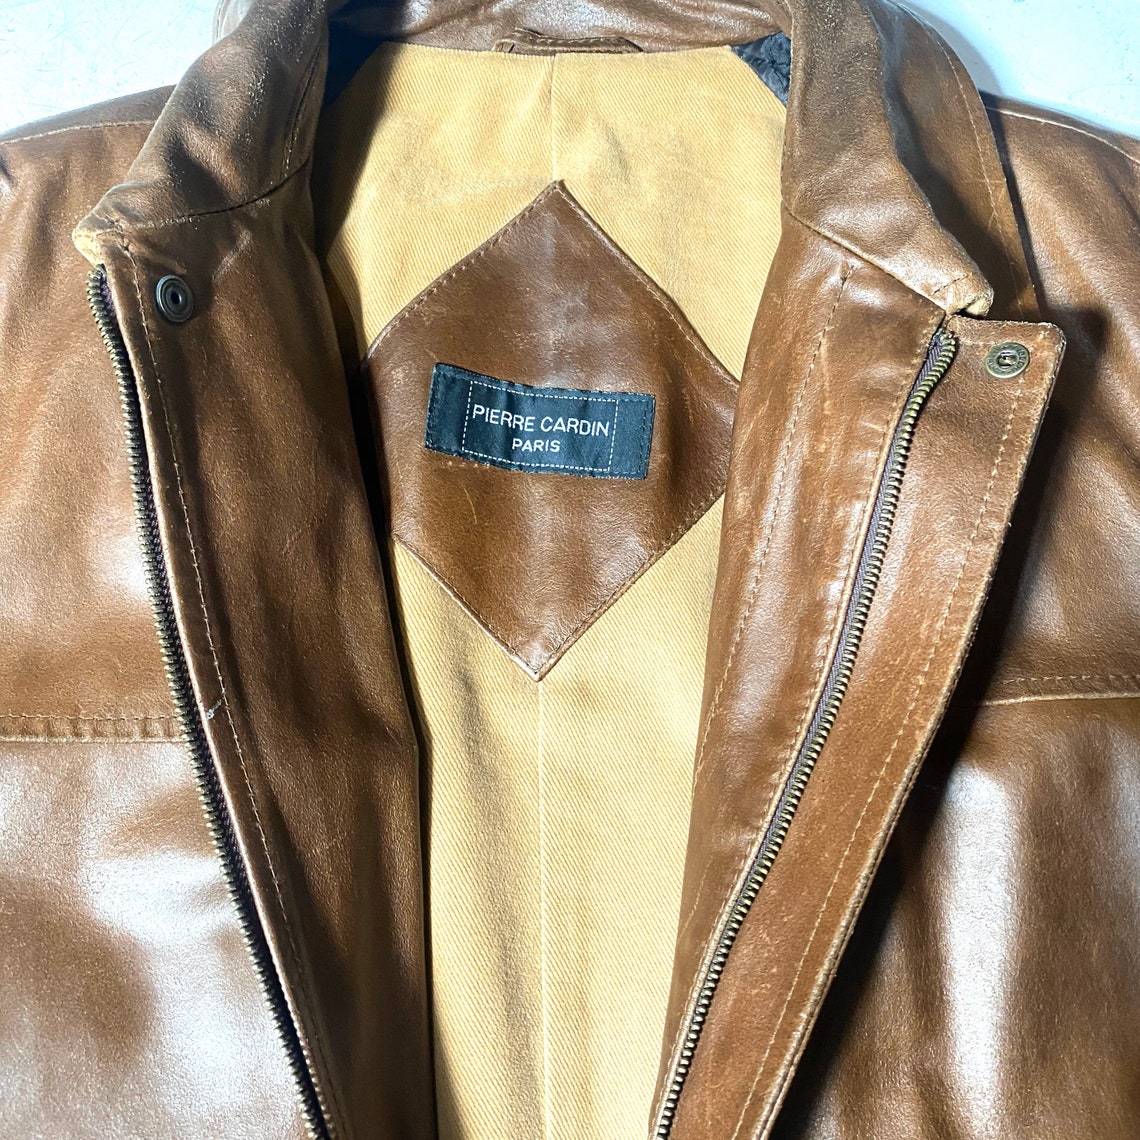 Pierre Cardin Paris tan leather coat / jacket with beige | Etsy